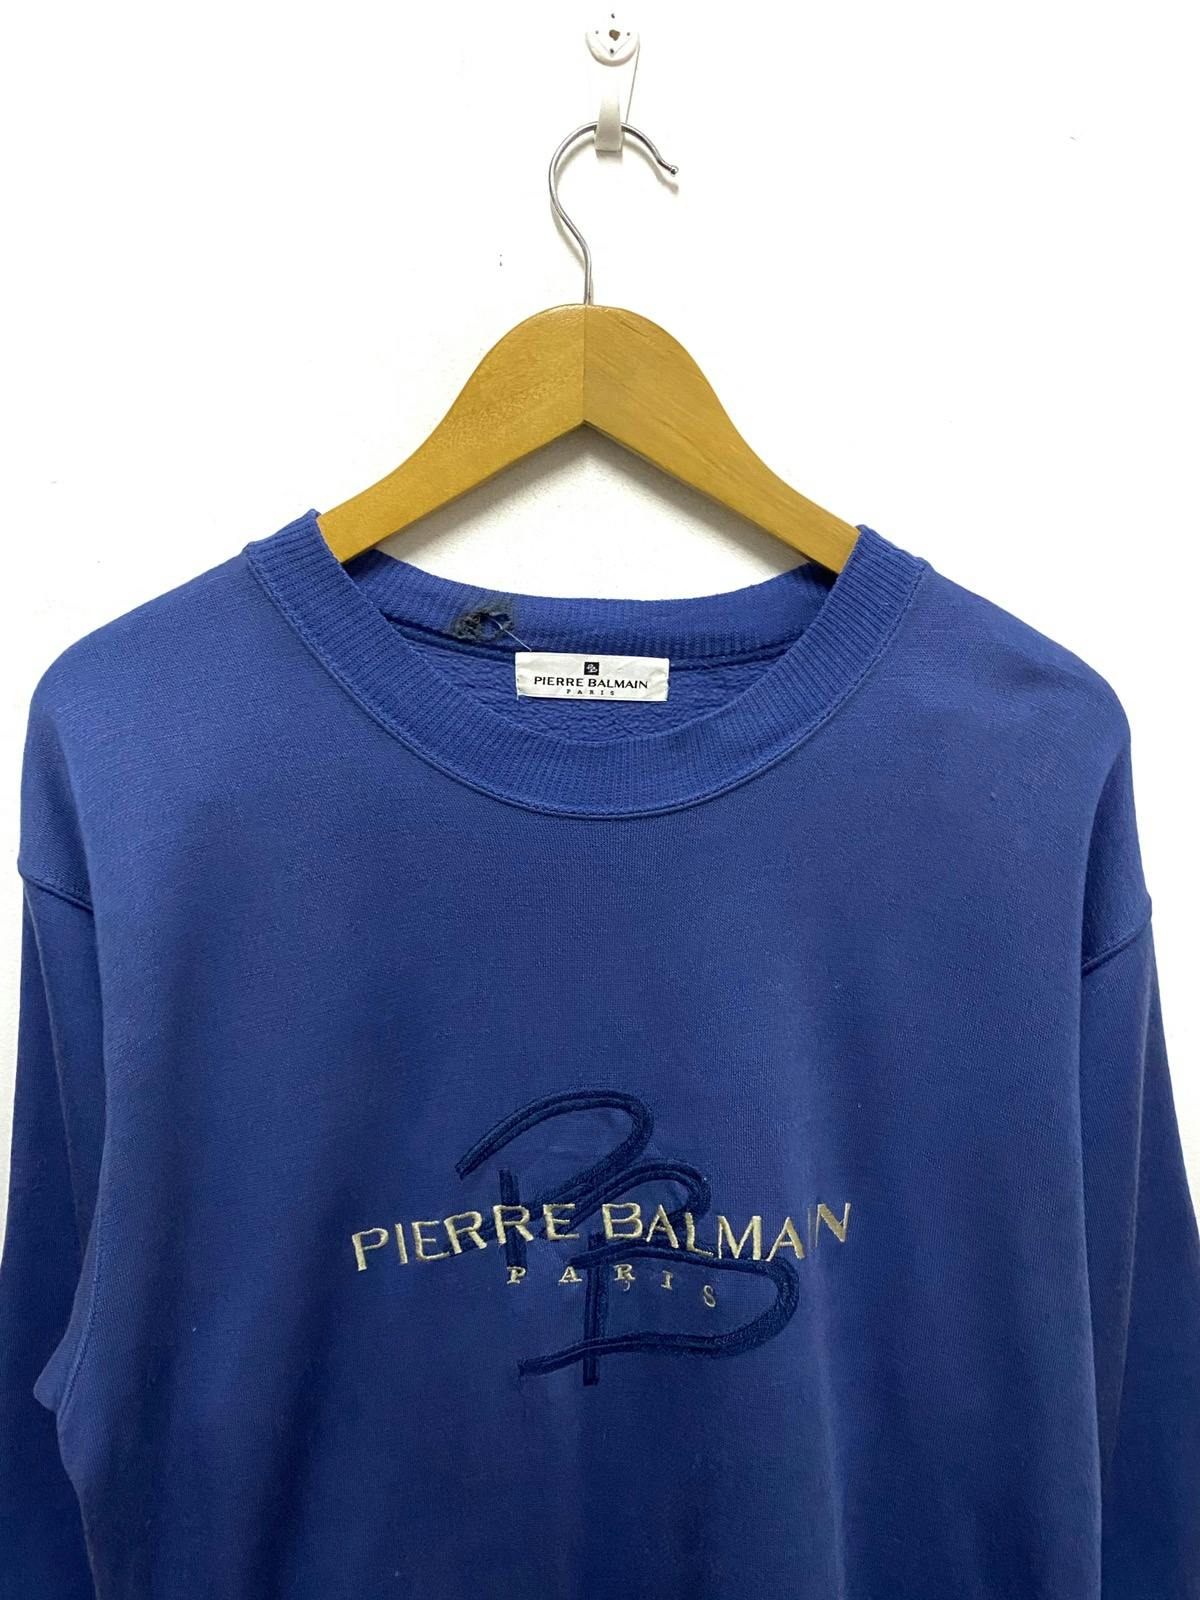 Vintage Pierre Balmain Sweatshirt - 2